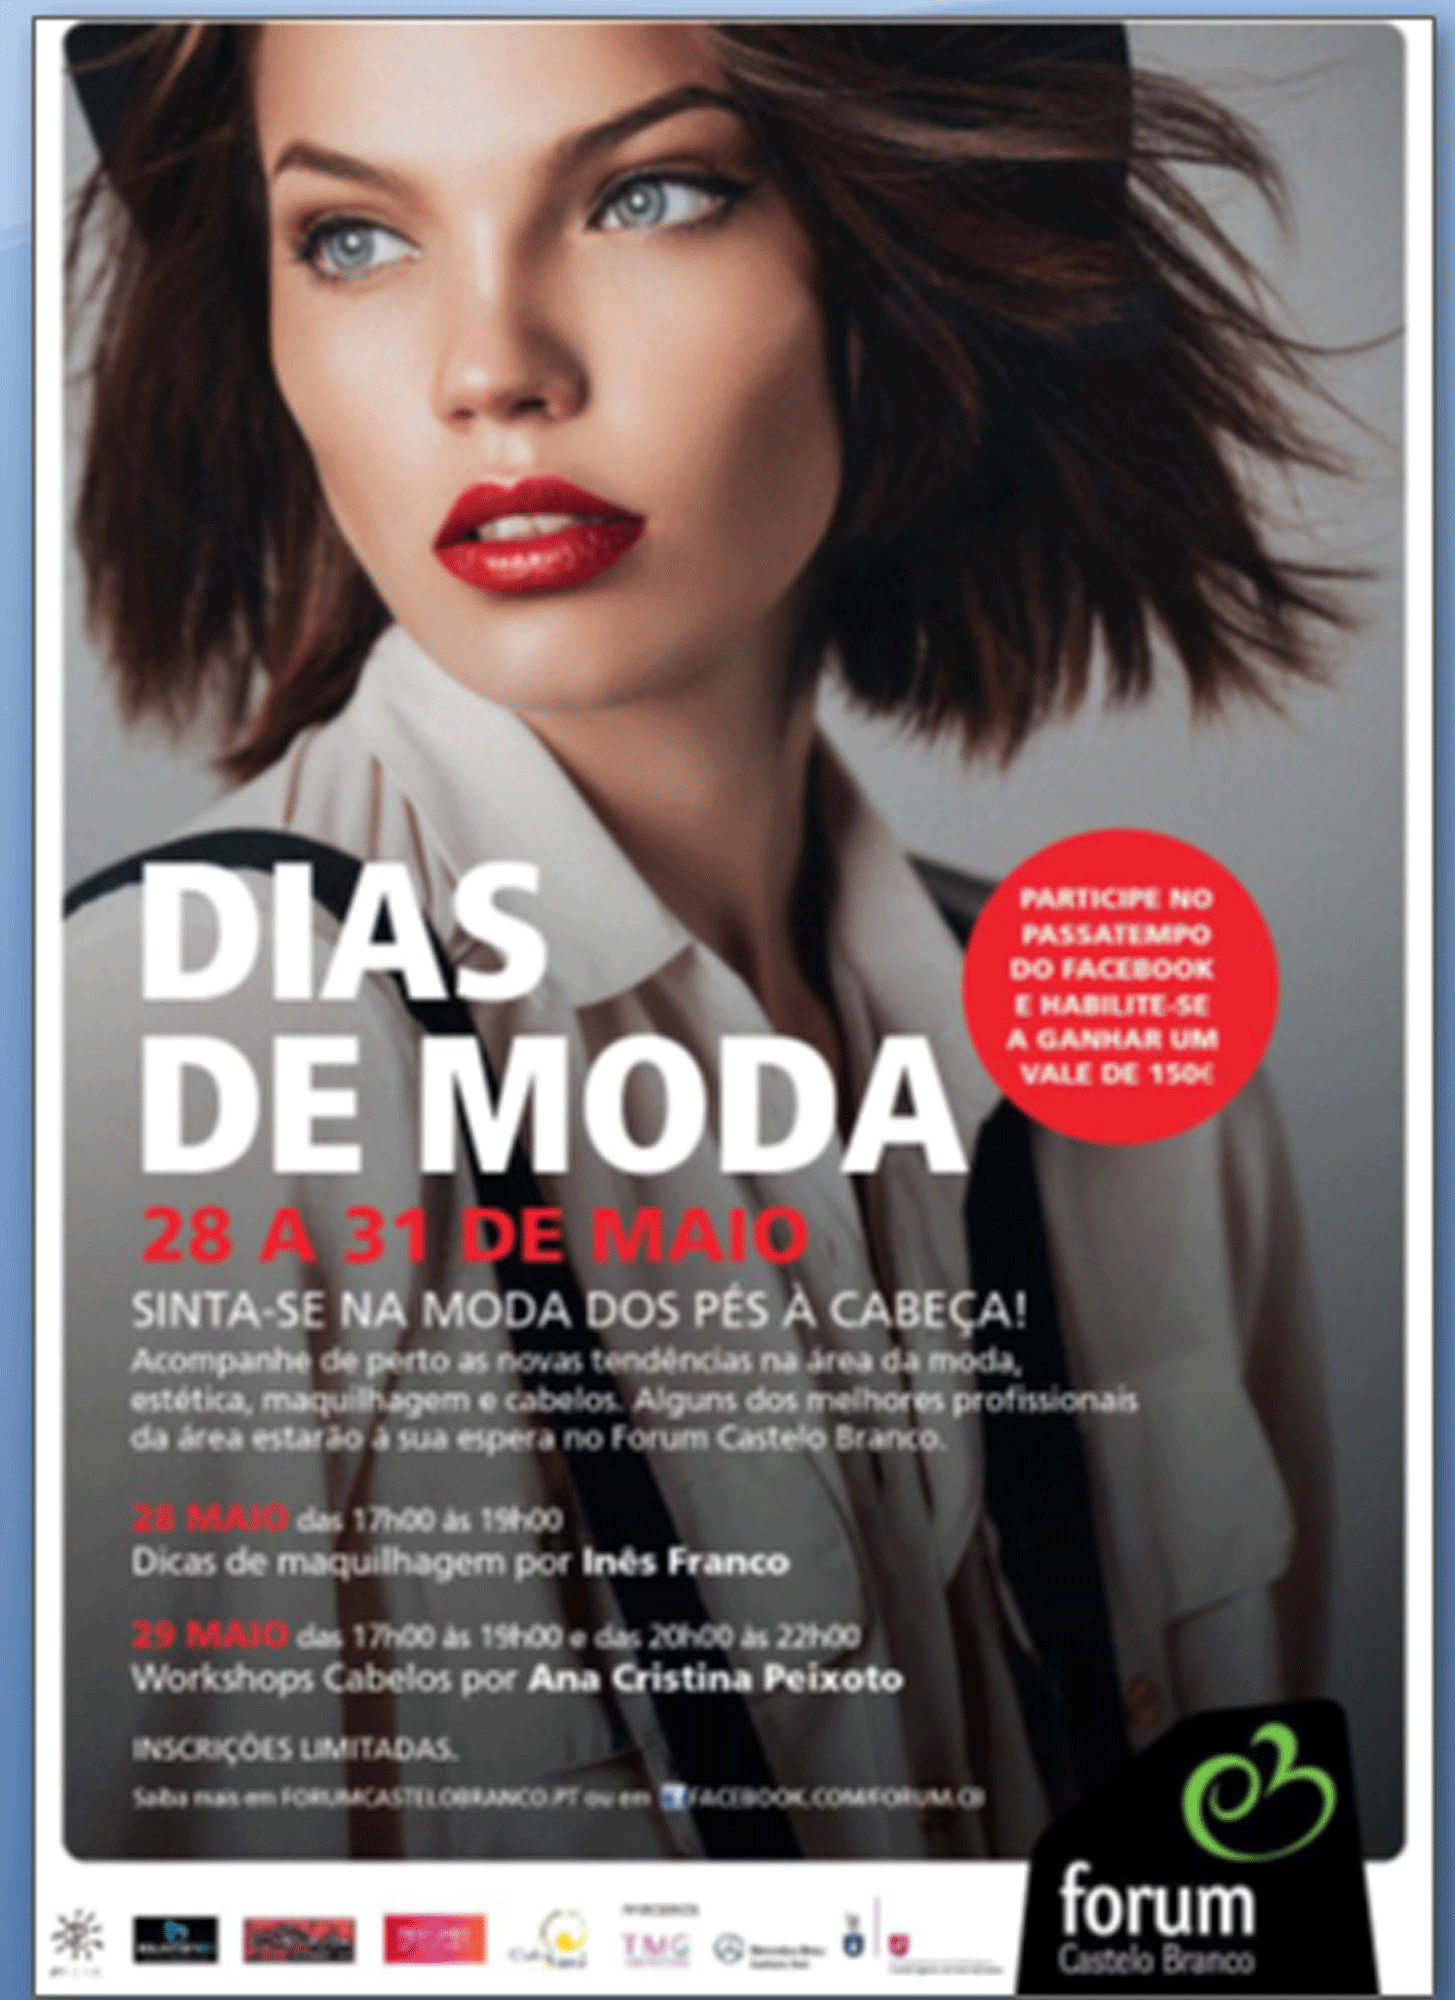 Castelo Branco: Forum promove "Dias de Moda"